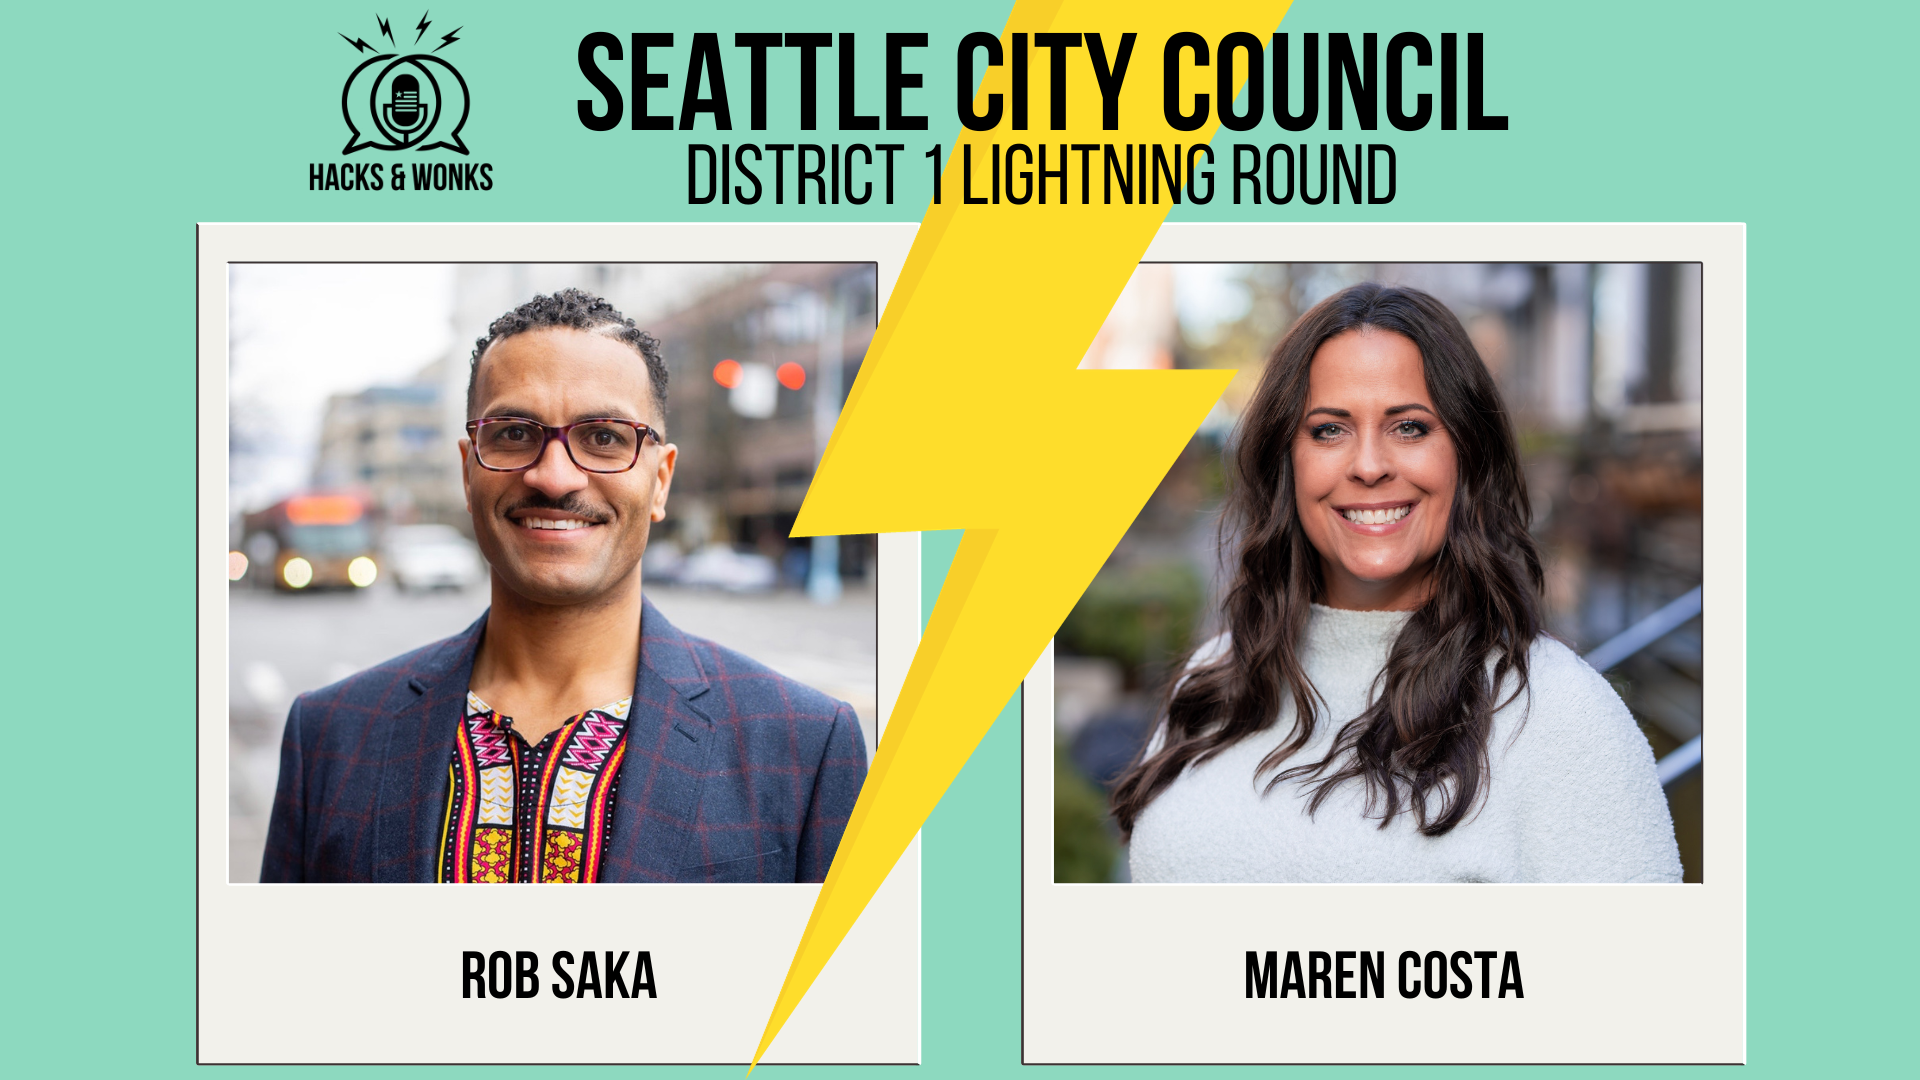 Lightning bolt divides photos of the District 1 candidates: Rob Saka and Maren Costa